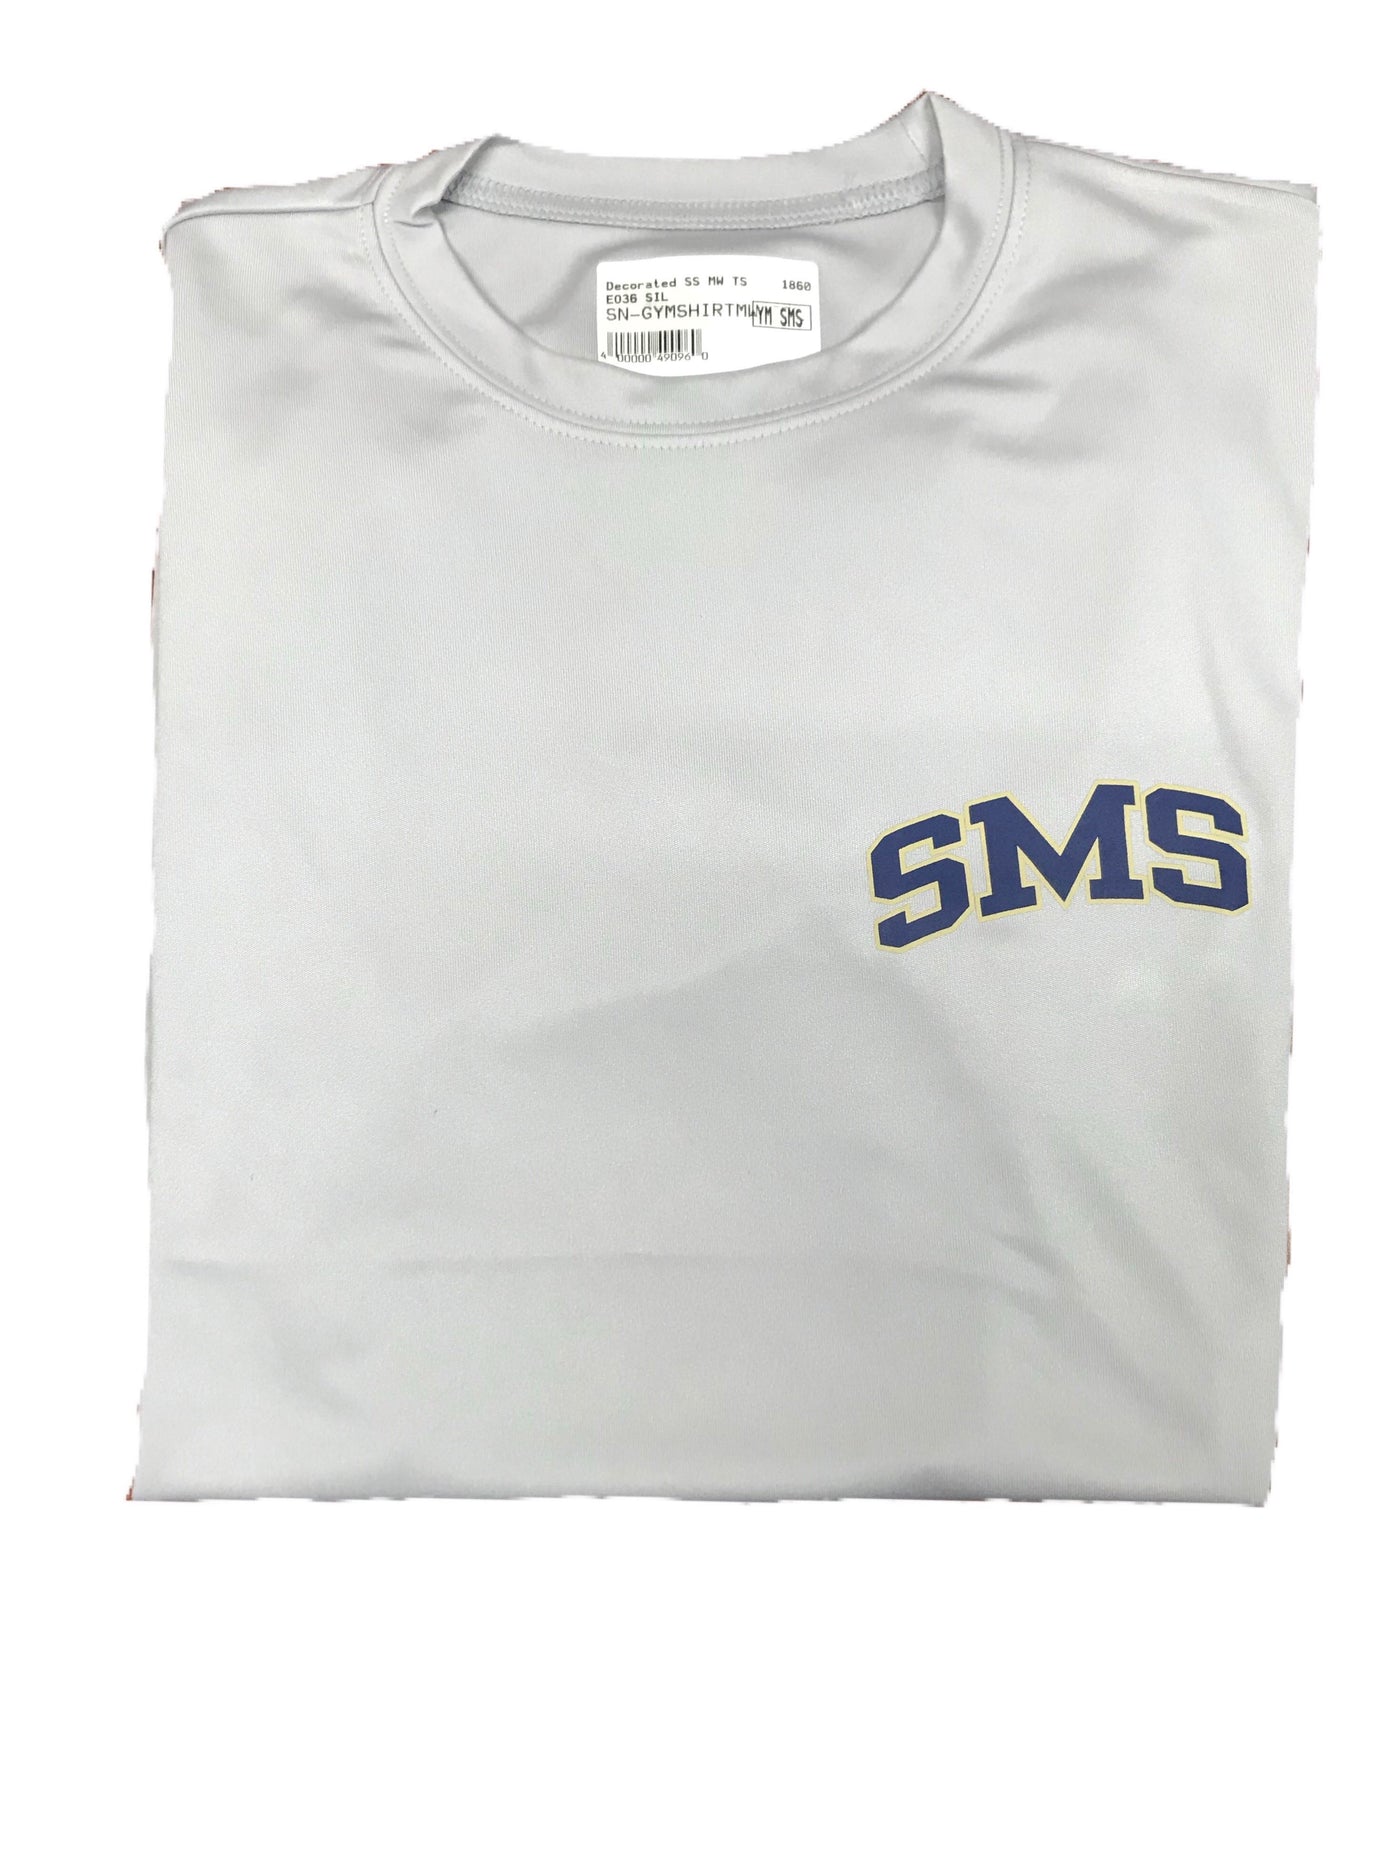 SMS PE shirt